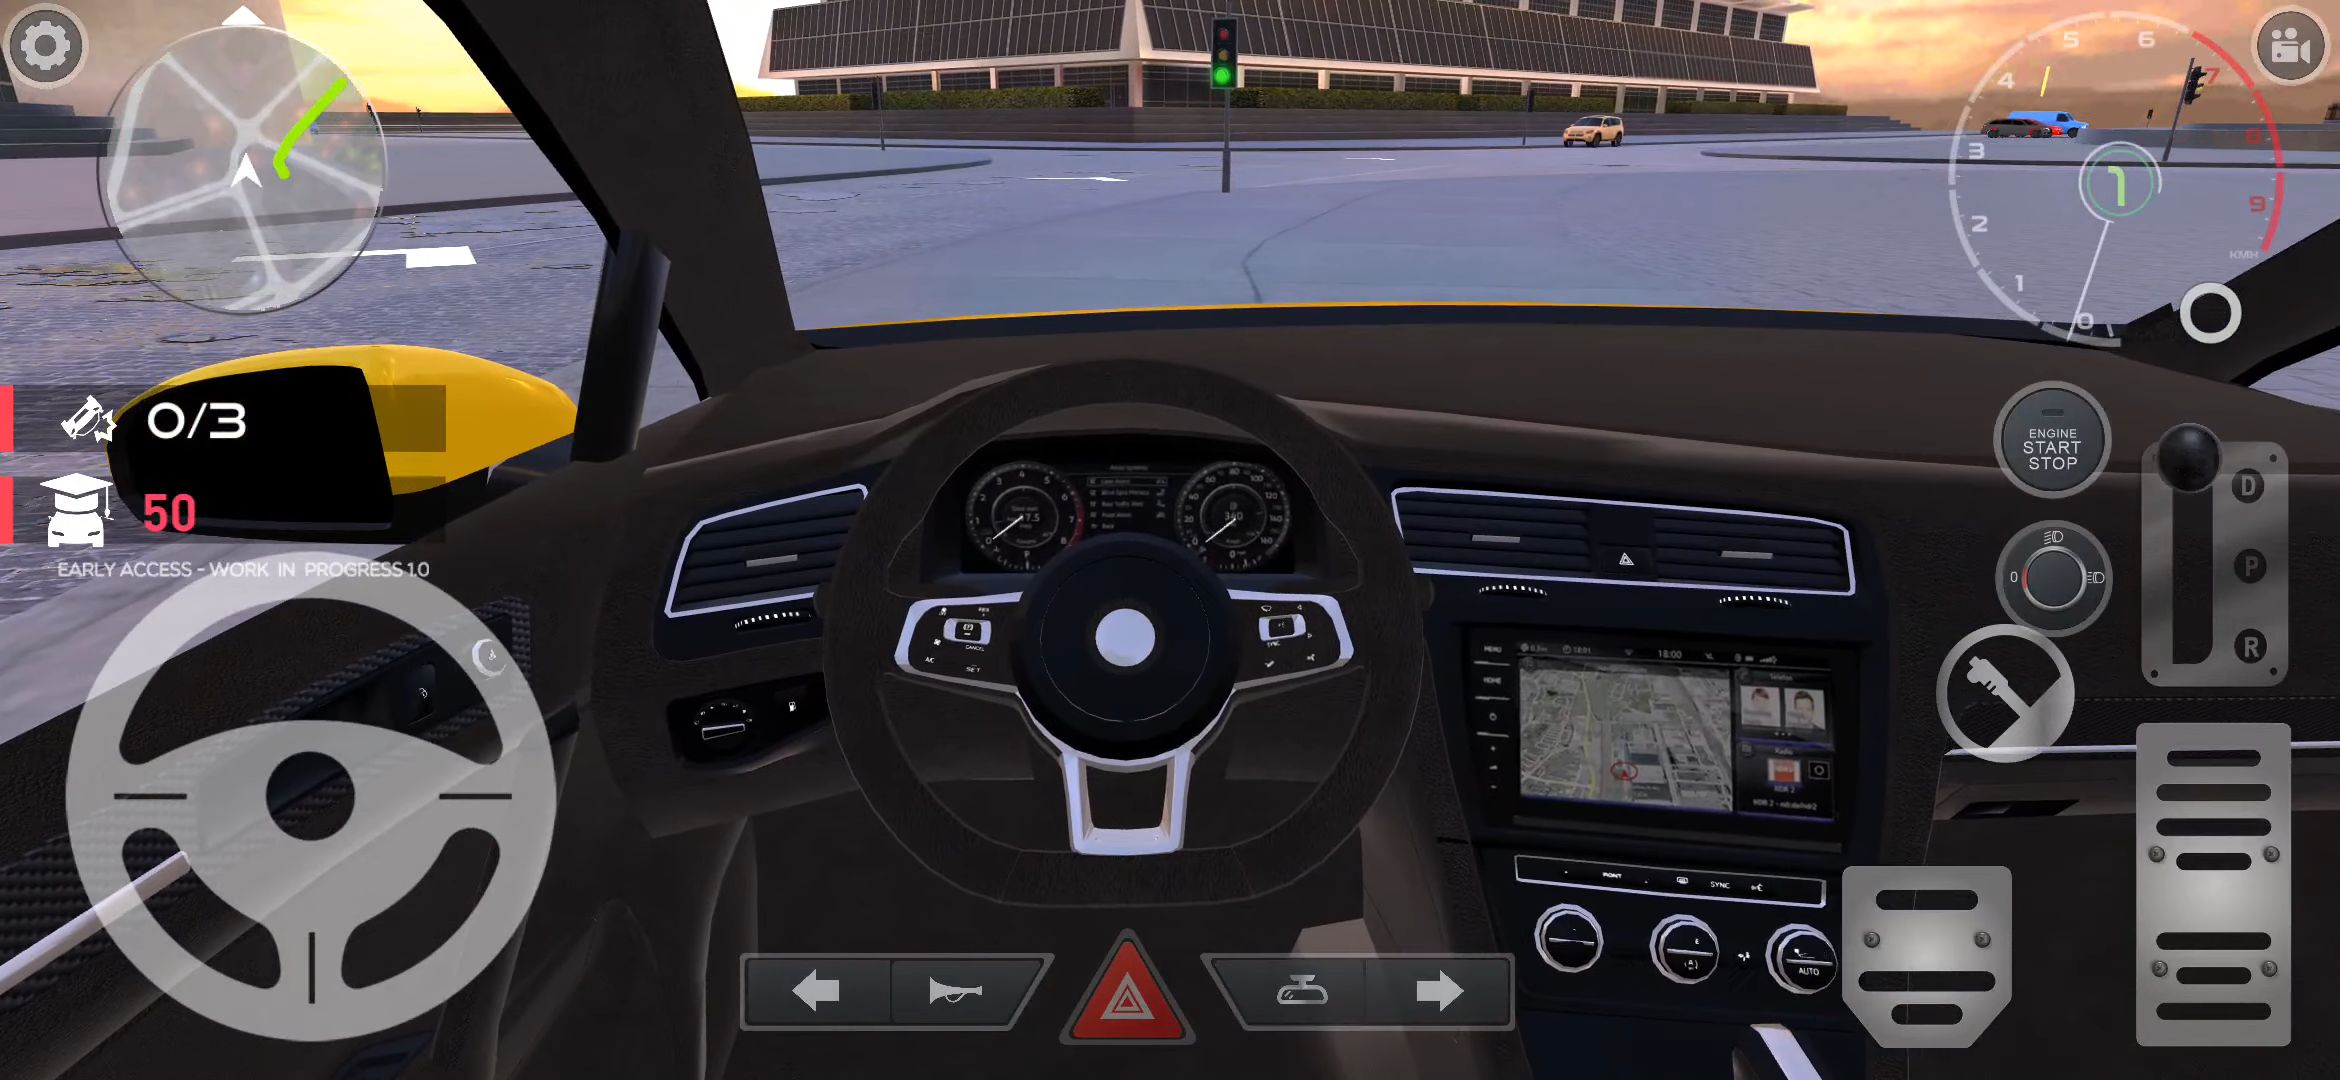 PetrolHead : Traffic Quests - Joyful City Driving für Android